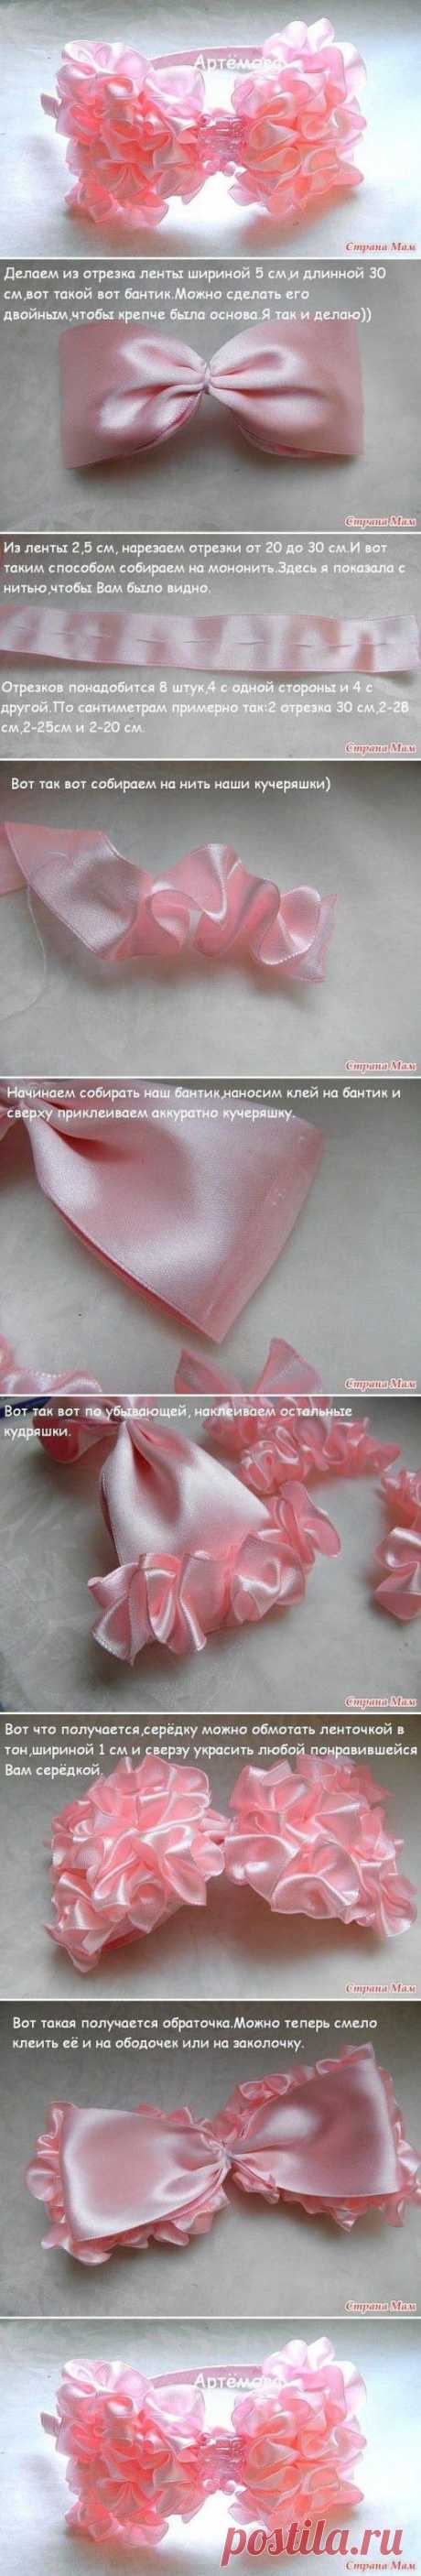 DIY Easy Ruffled Ribbon Hairband | www.FabArtDIY.com